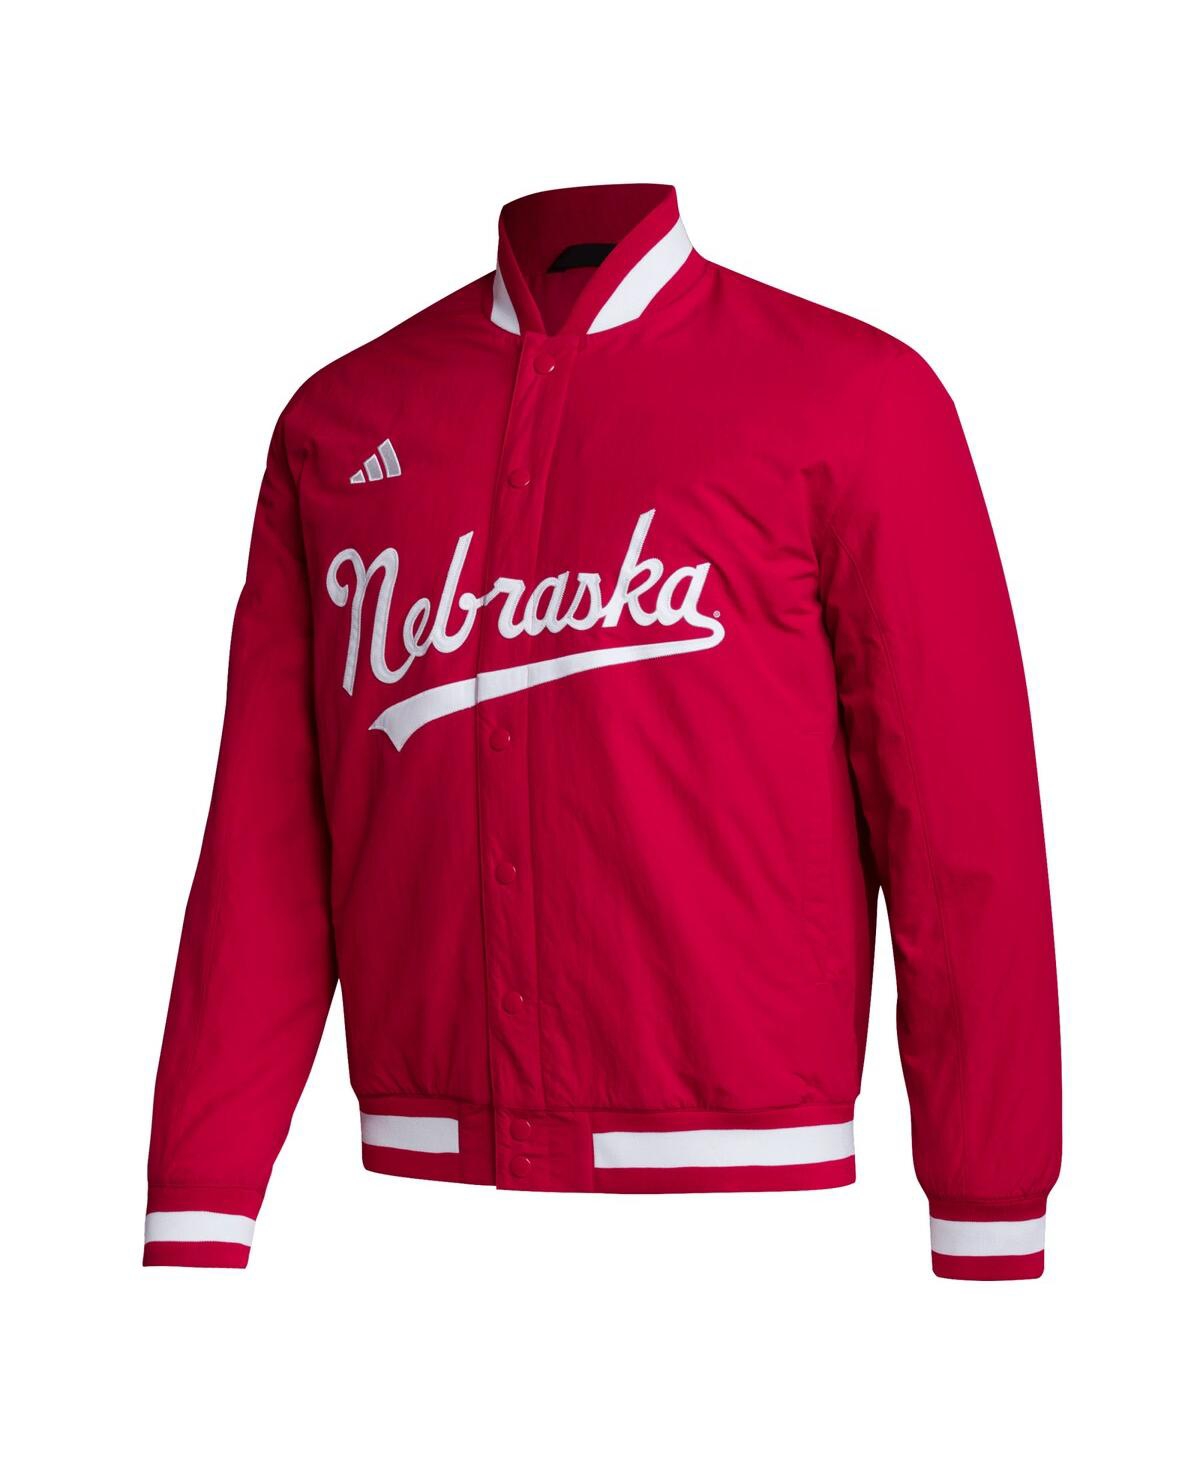 Shop Adidas Originals Men's Adidas Red Scarlet Huskers Baseball Coaches Full-snap Jacket